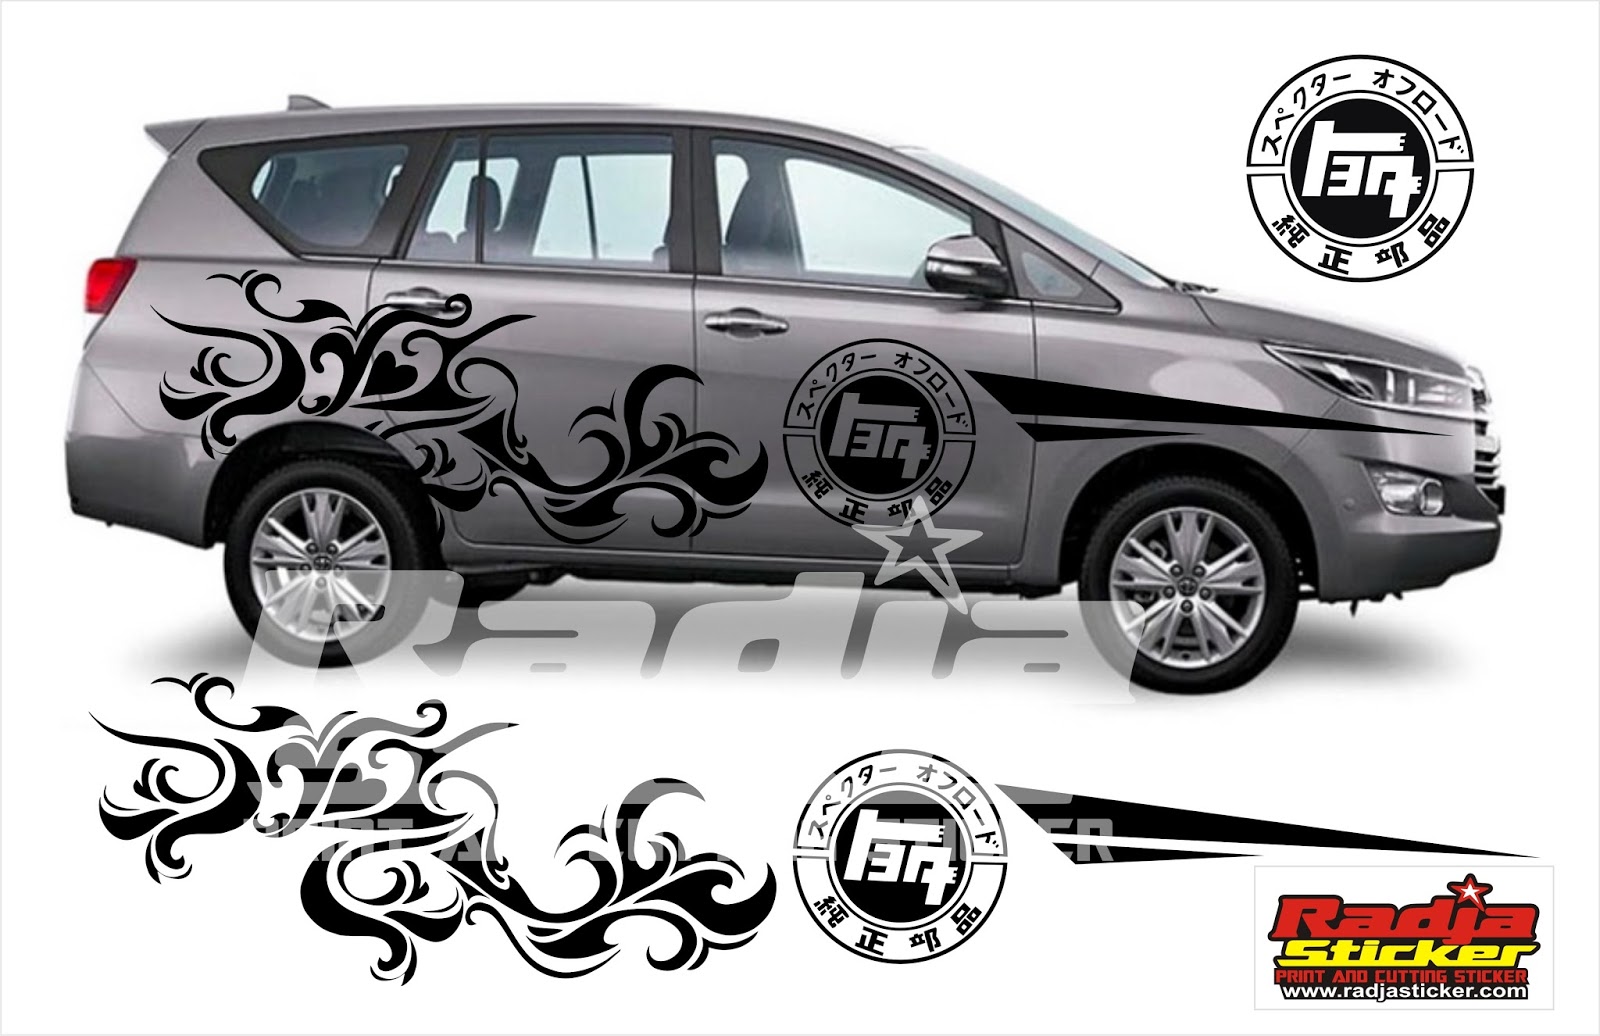 Contoh Gambar Cutting Sticker Mobil Yogyakarta Modifikasi Motor